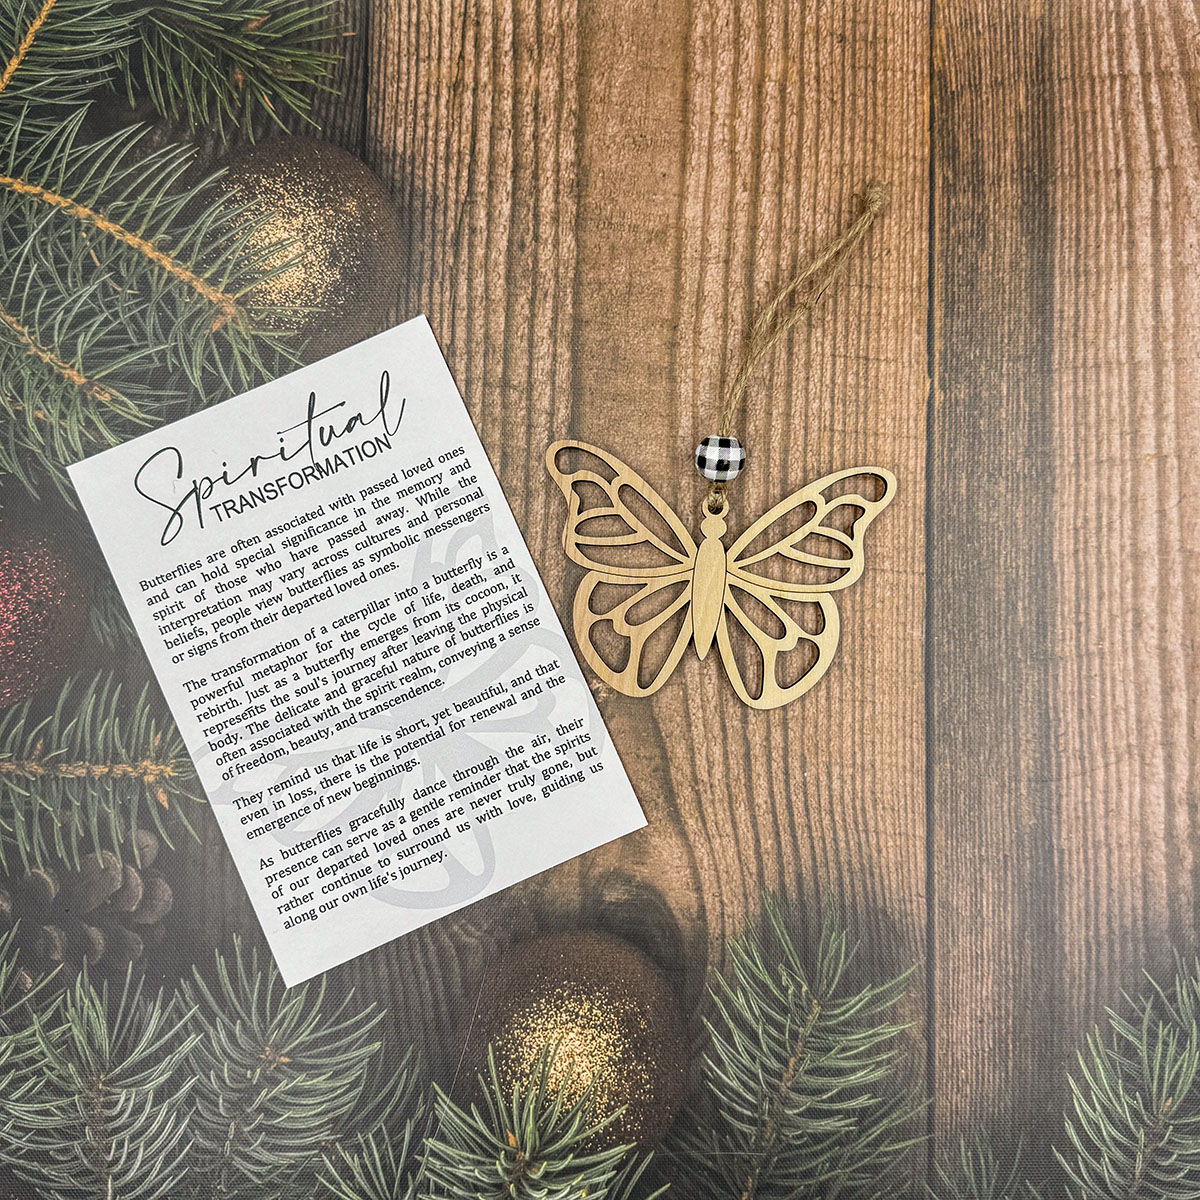 Butterfly Storyteller Ornament - Spiritual Transformation